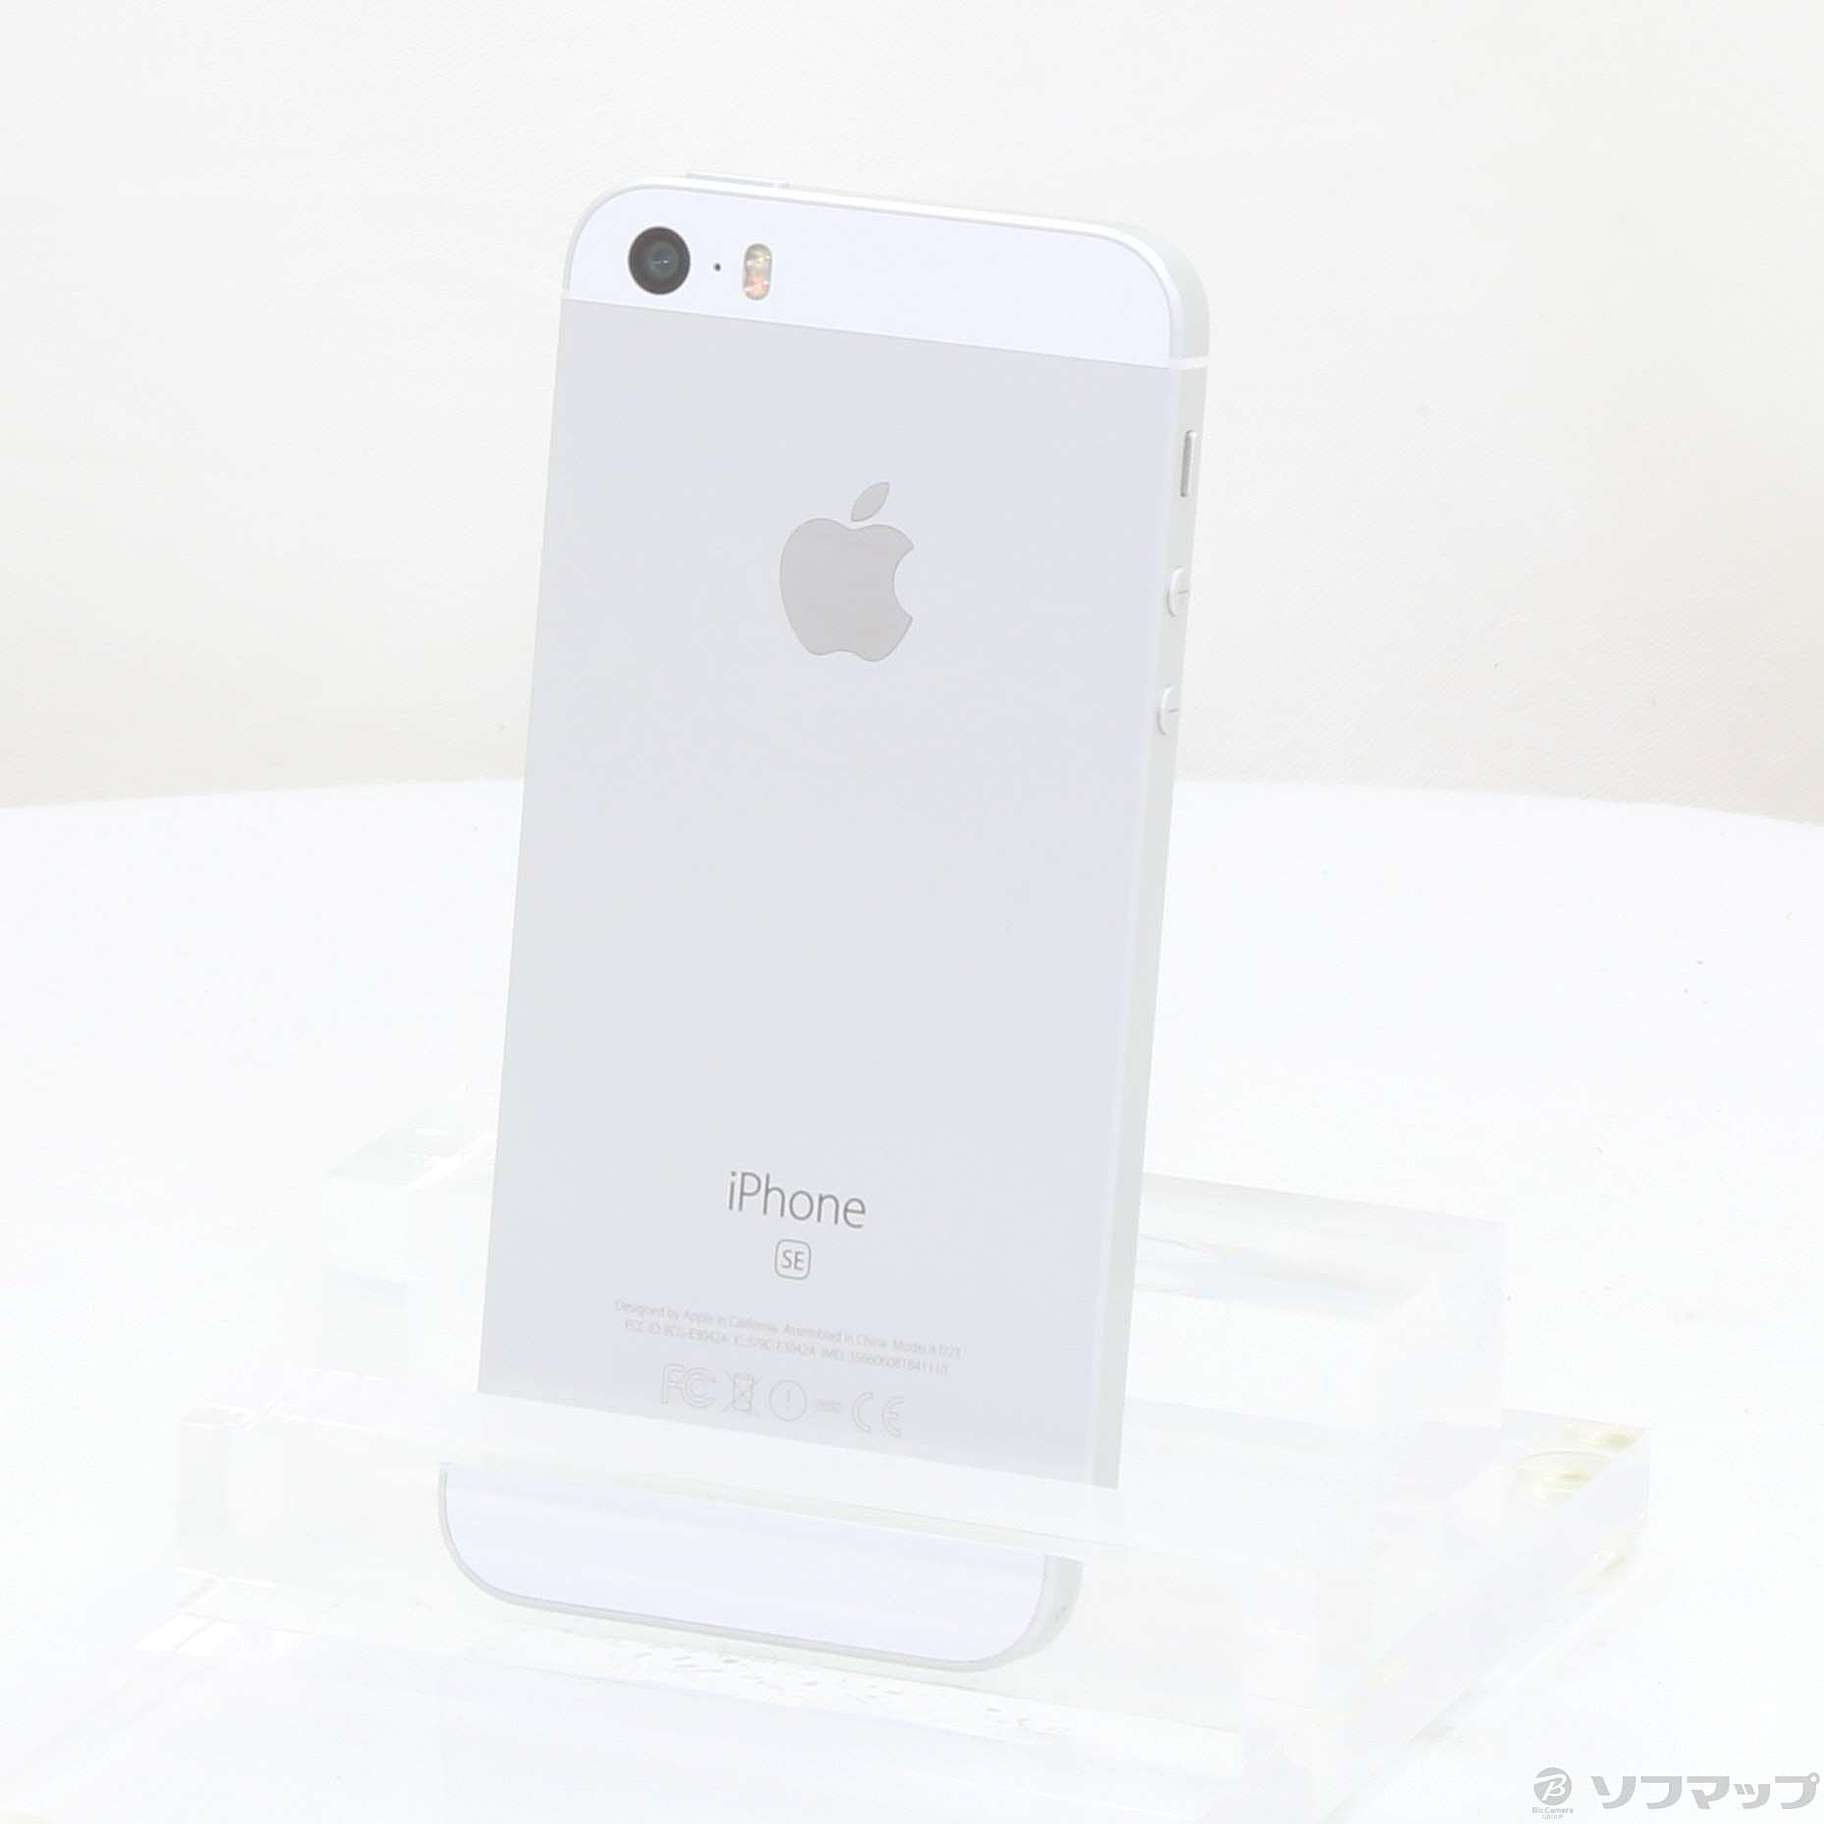 iPhone SE 32GB silver